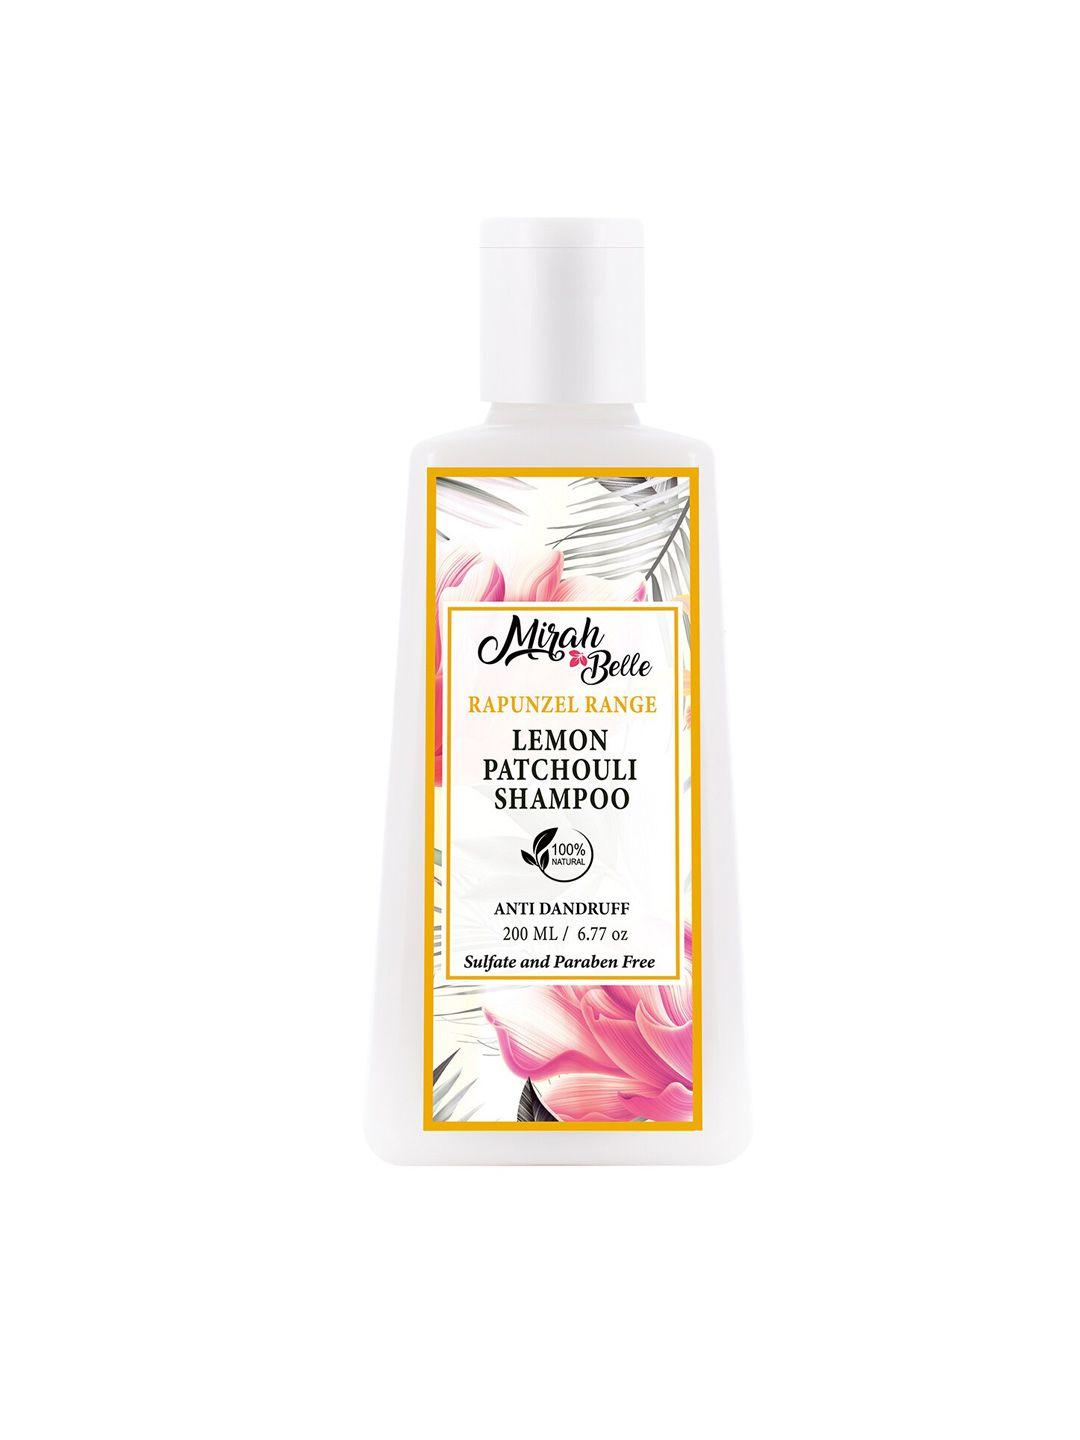 mirah belle lemon patchouli anti-dandruff shampoo - 200 ml